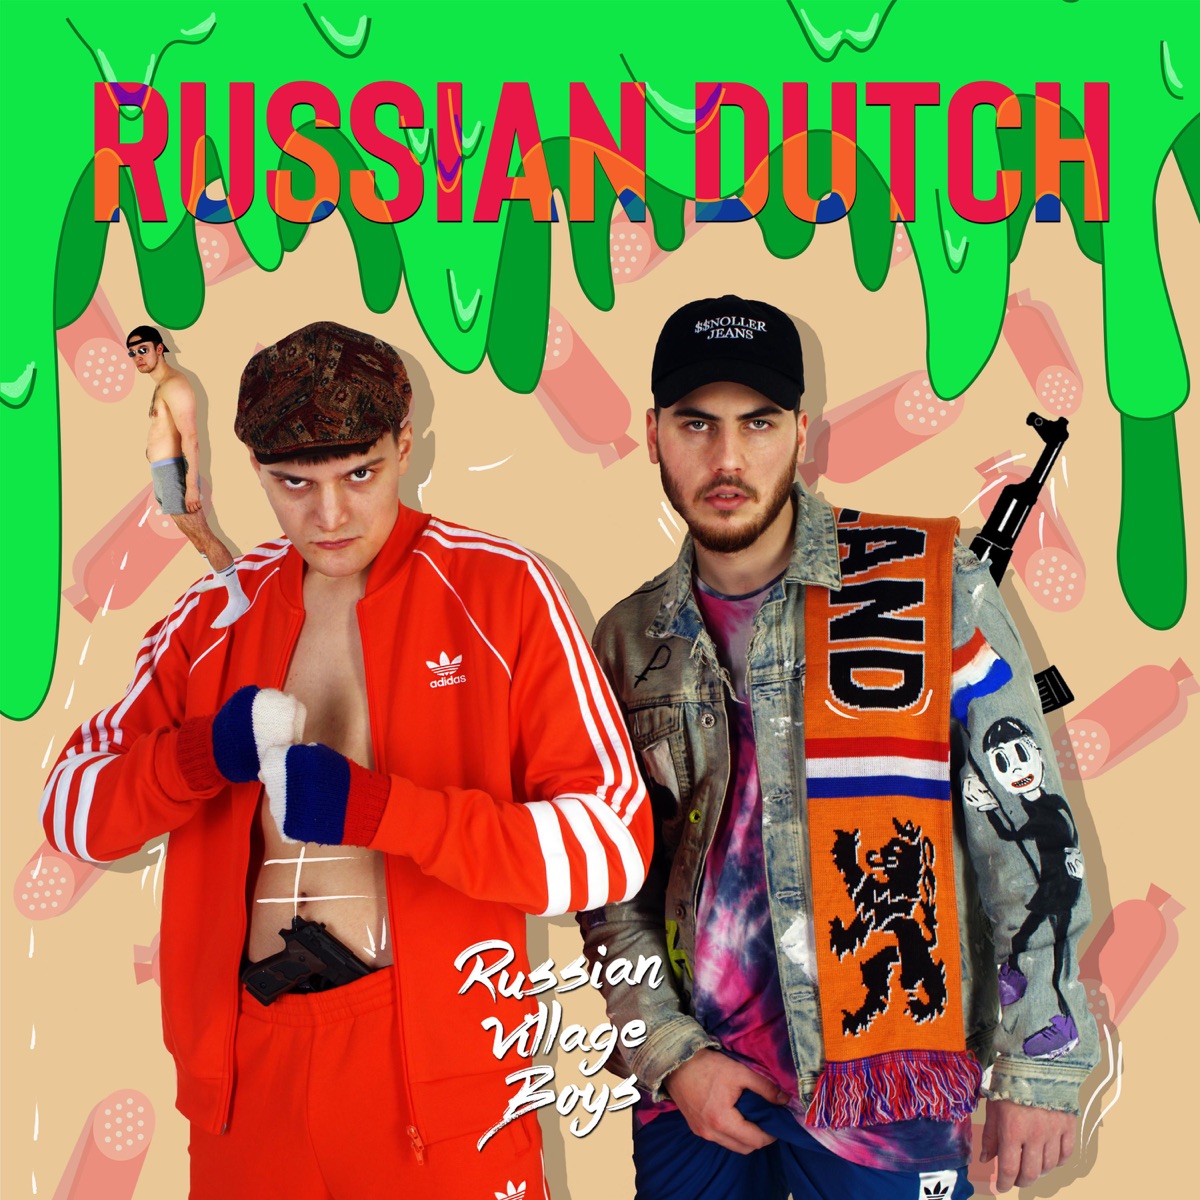 Adidas - Single by Russian Village Boys & Mr. Polska on Apple Music